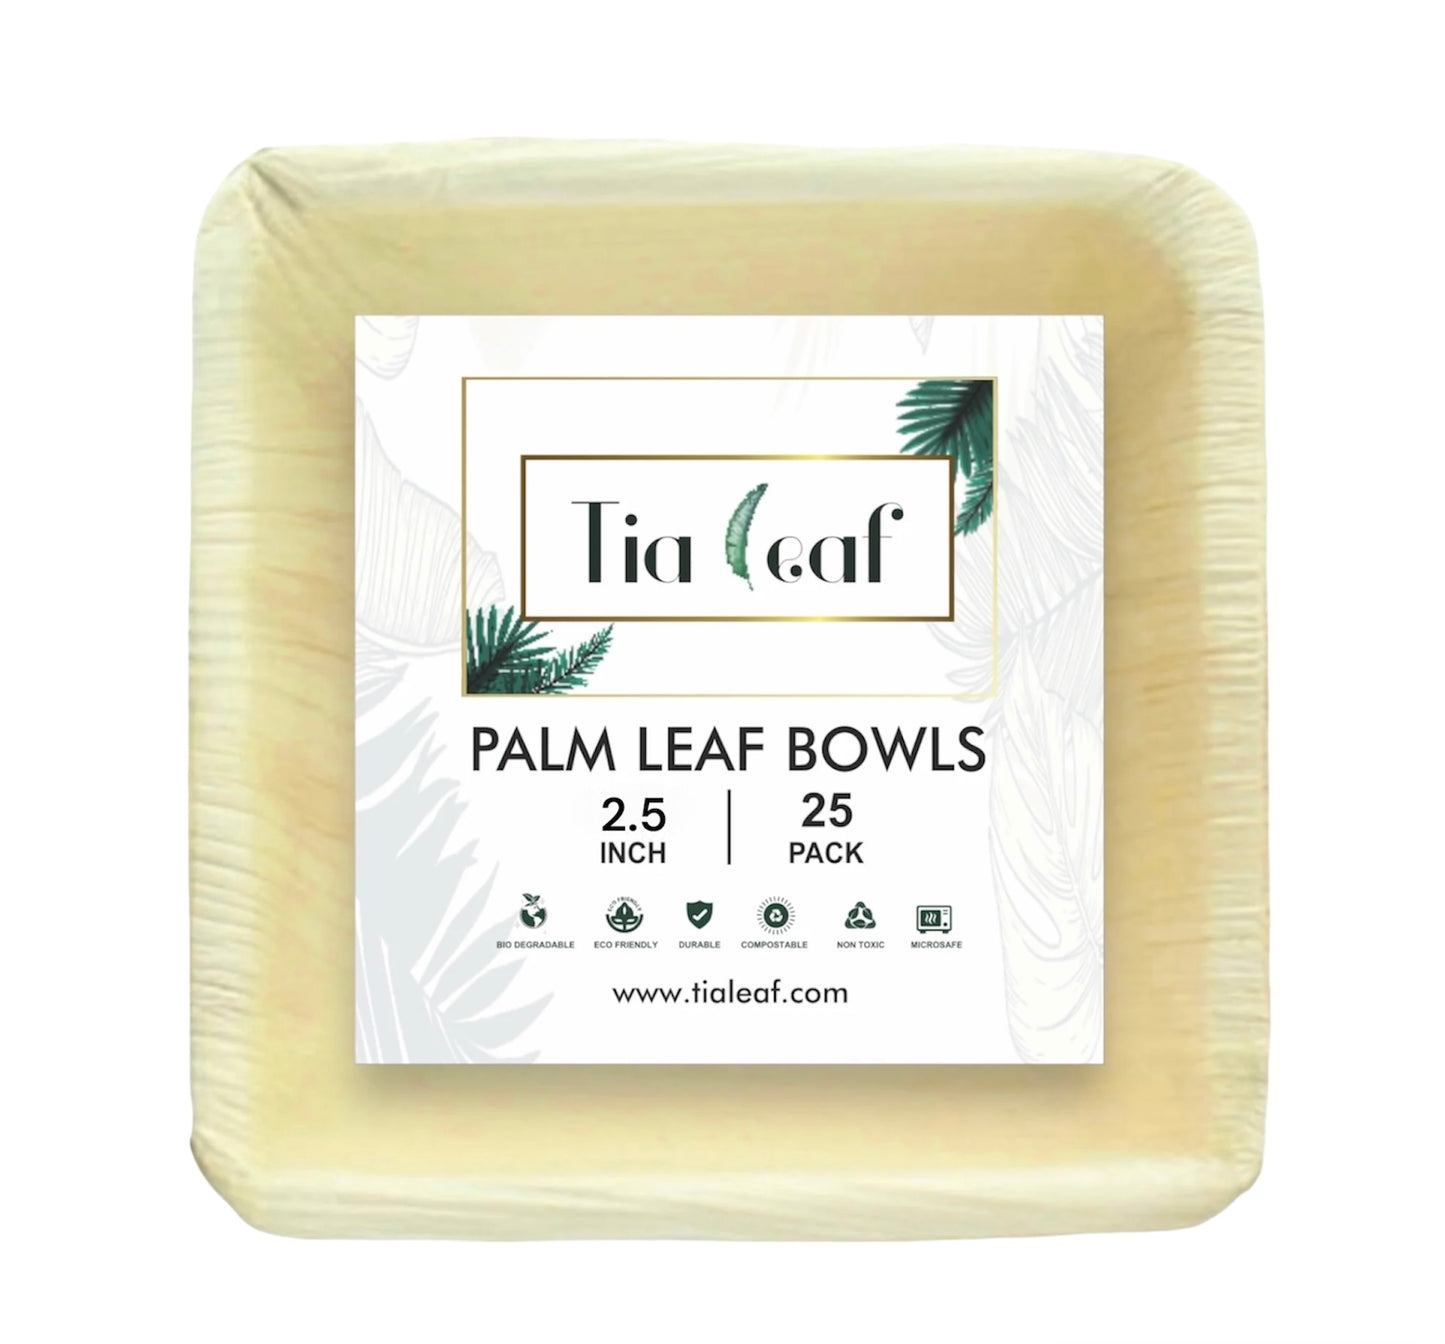 2.5" Square Palm Leaf Bowls